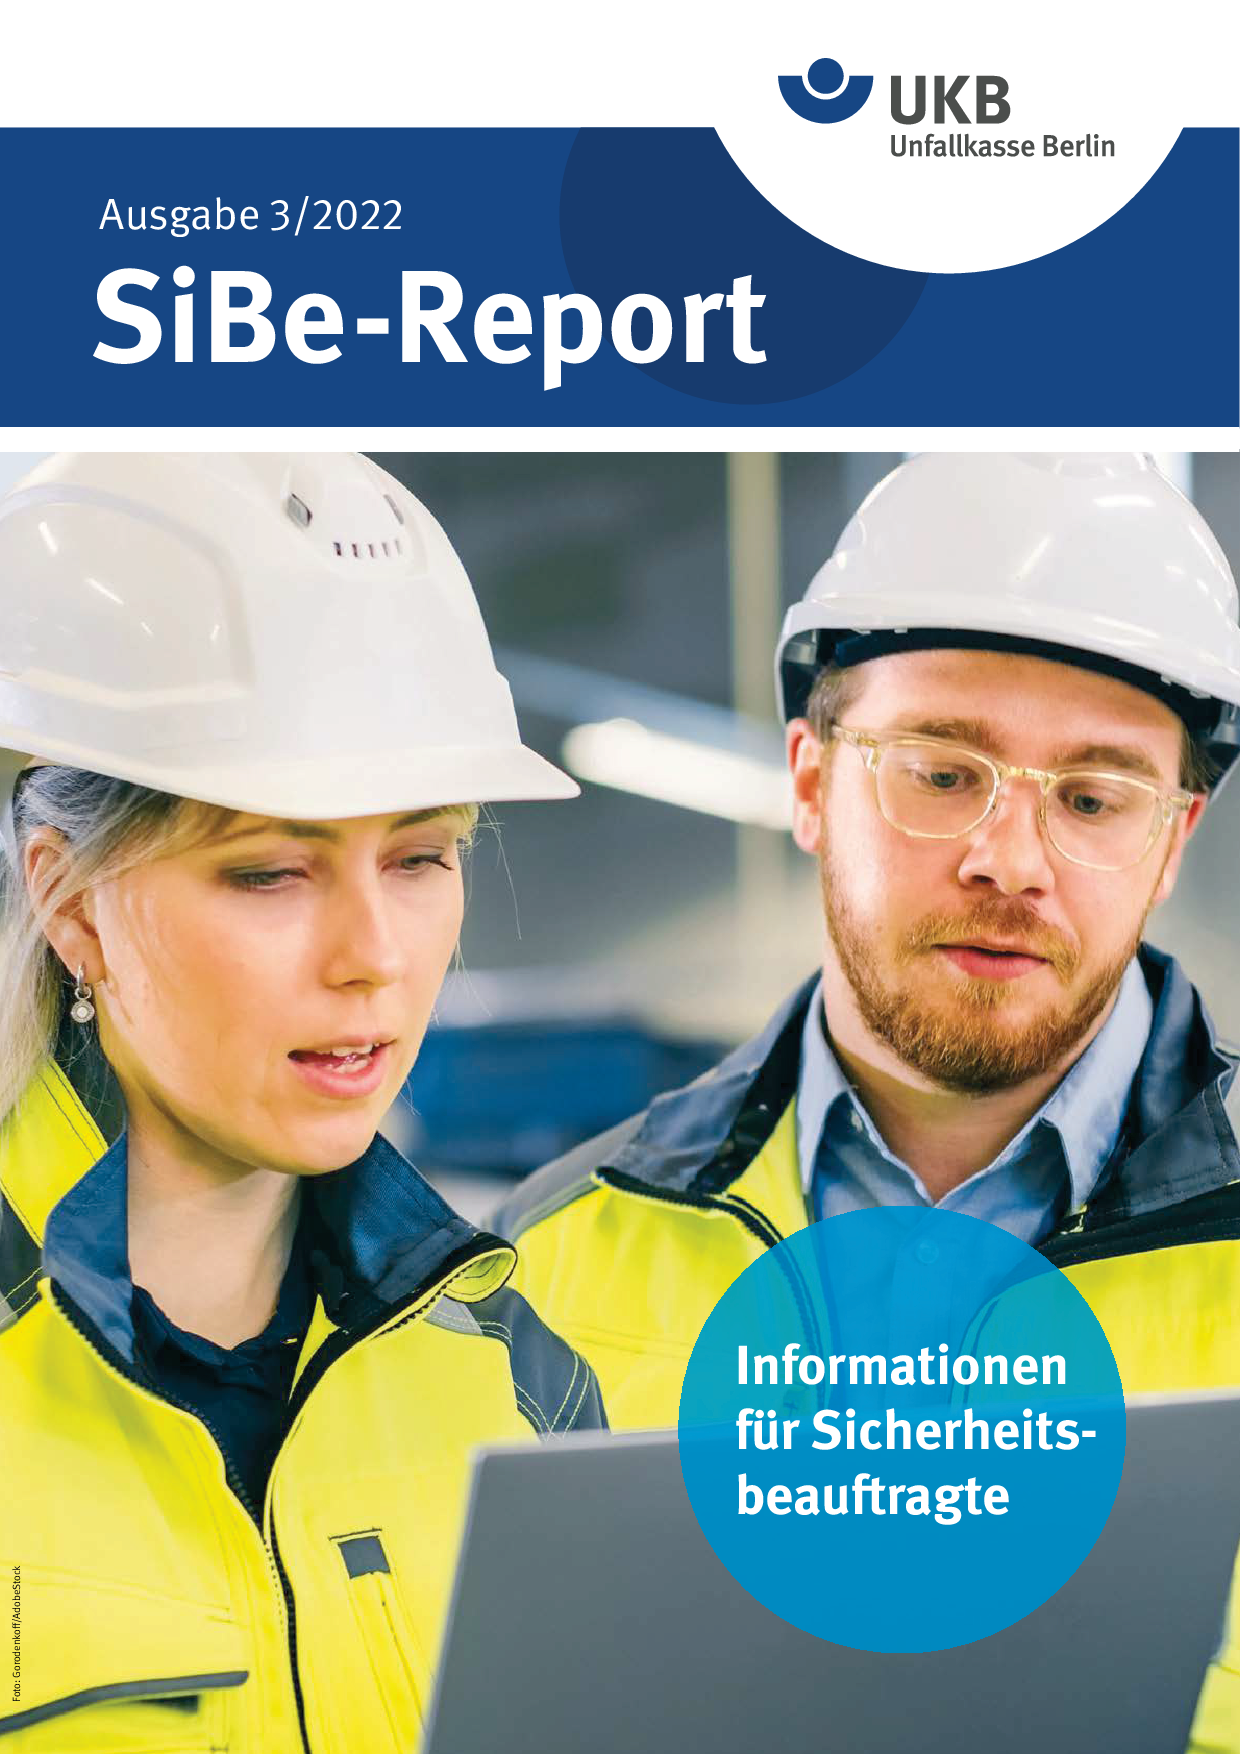 SiBe-Report 3/2022: Zwei Personen in Warnkleidung mit Laptop